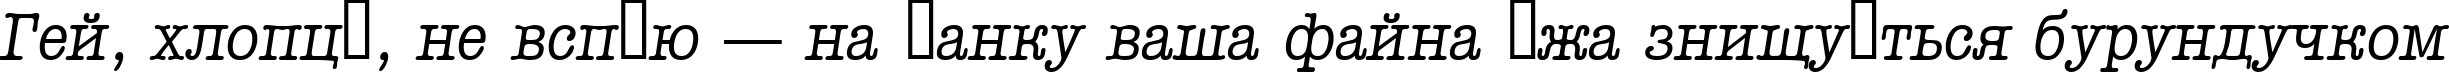 Пример написания шрифтом a_OldTyperNr Italic текста на украинском